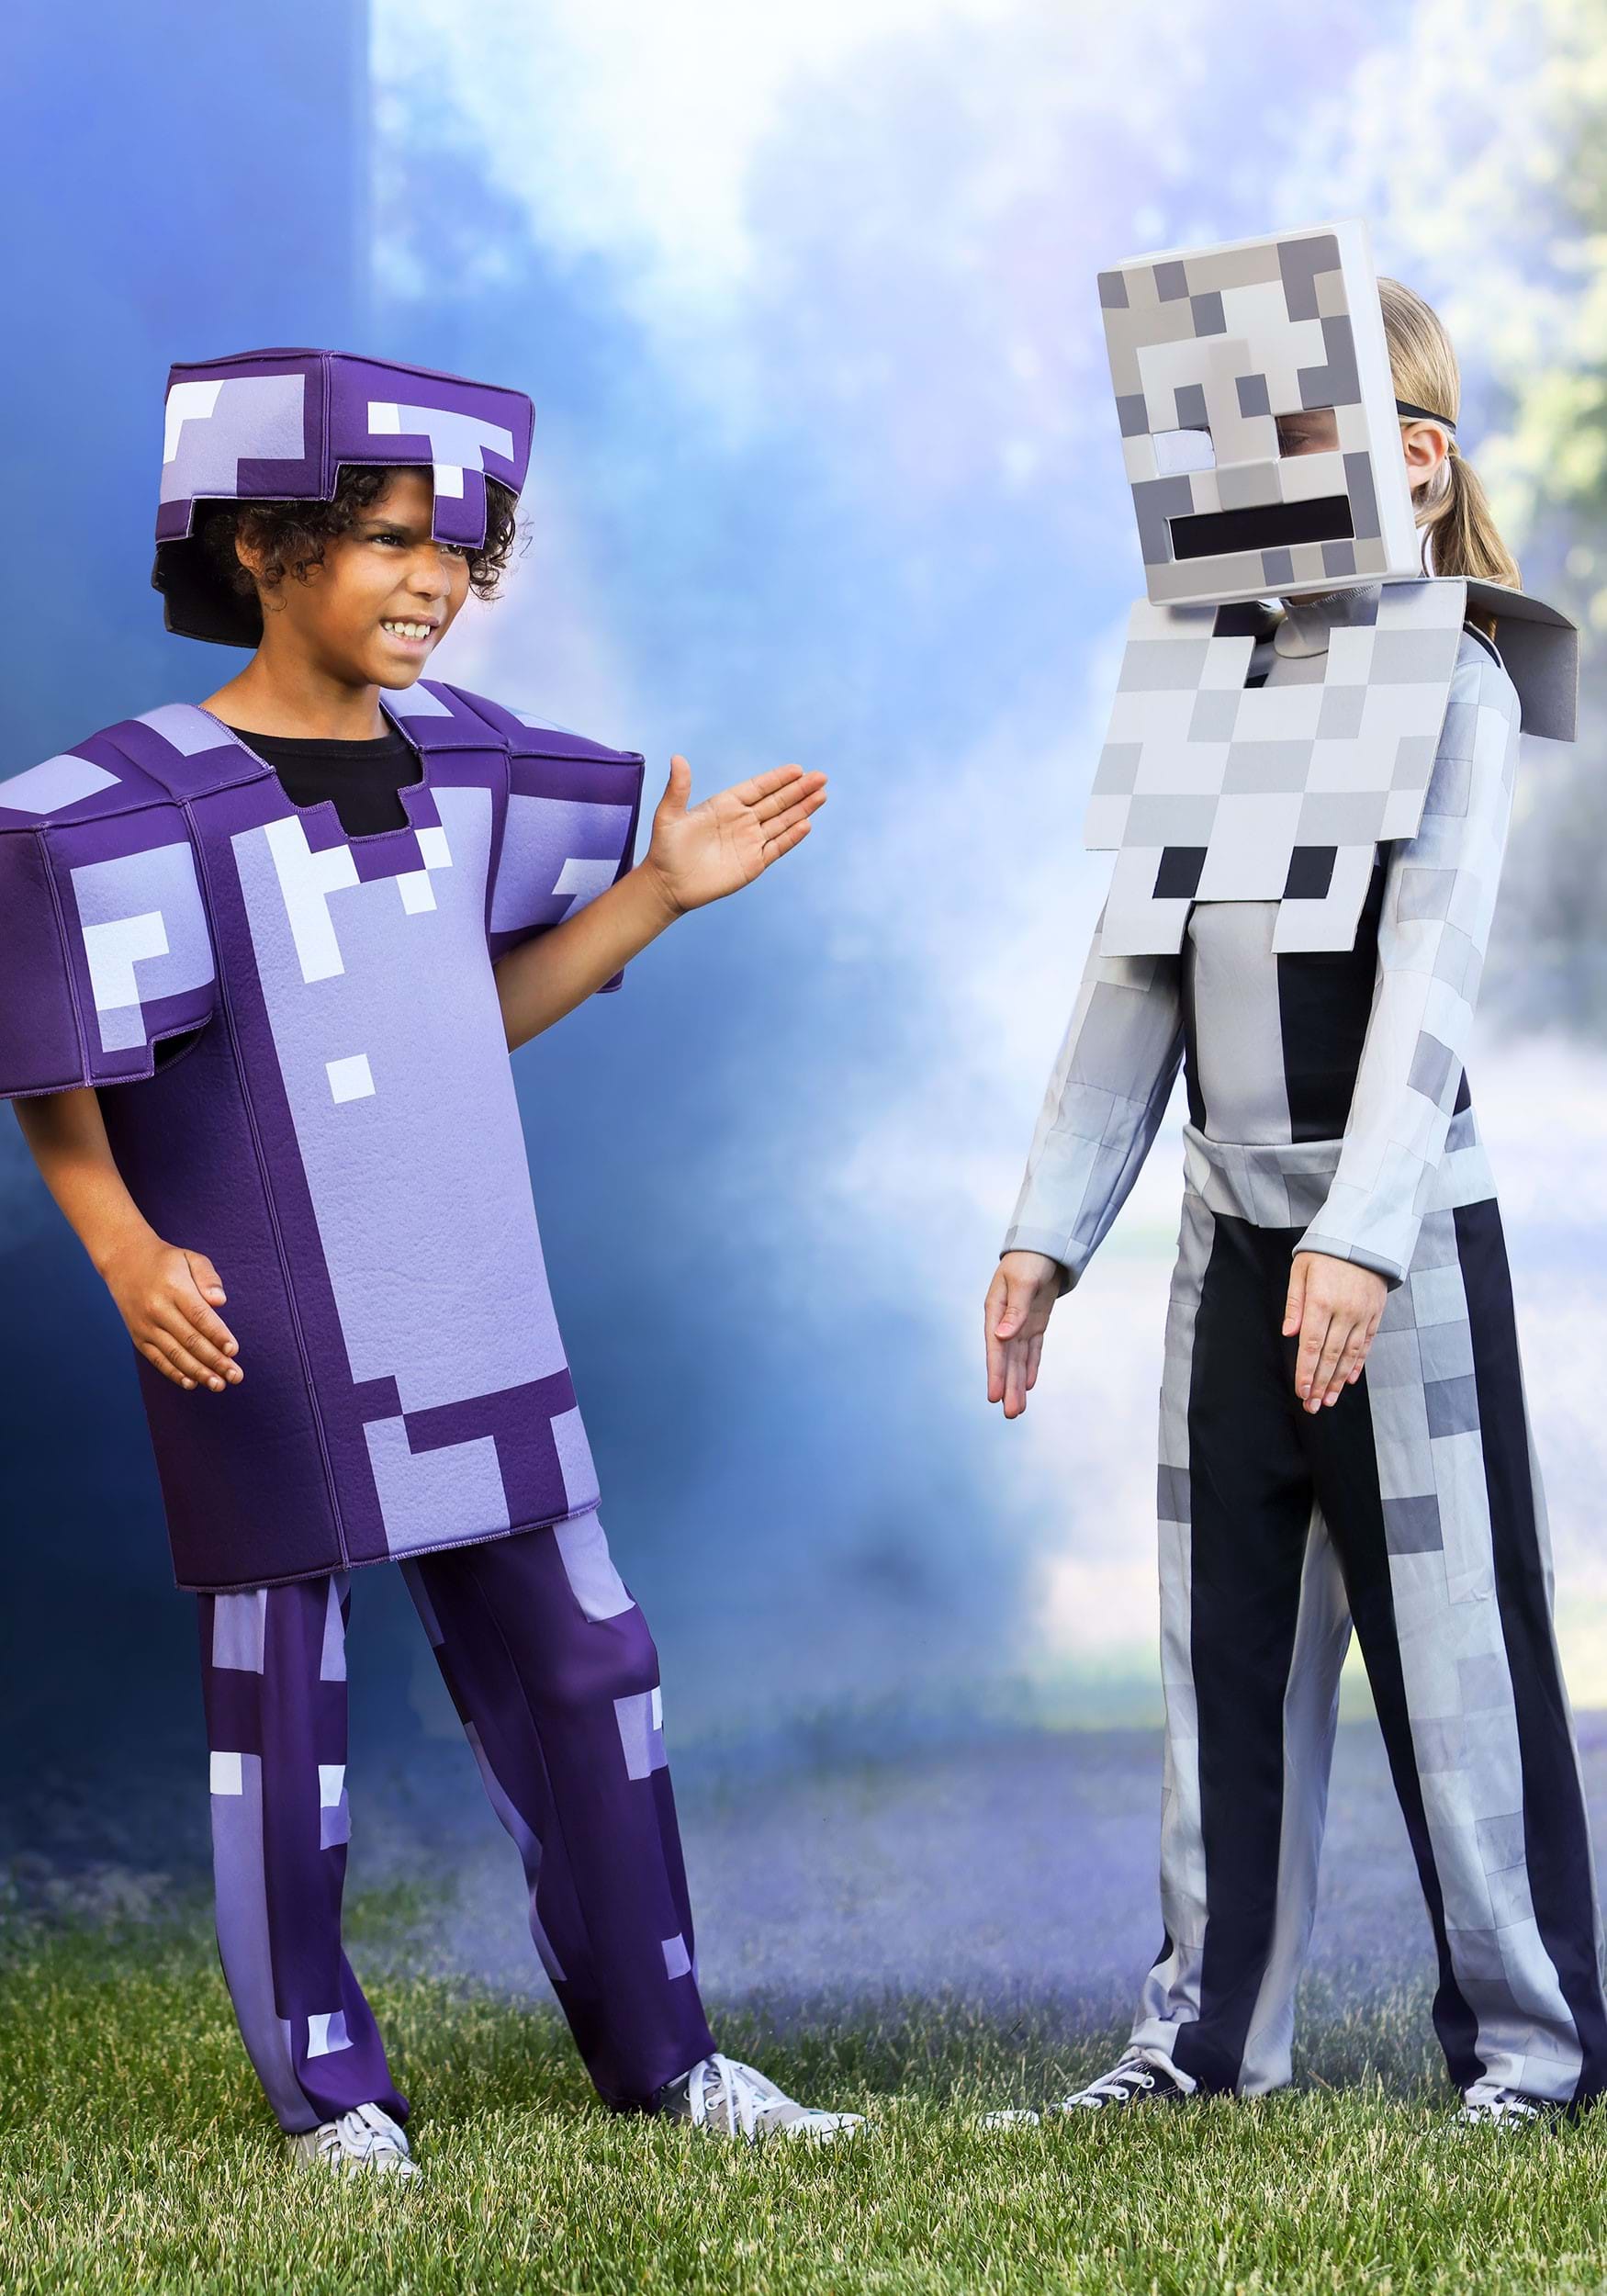 Minecraft Classic Kid's Skeleton Costume